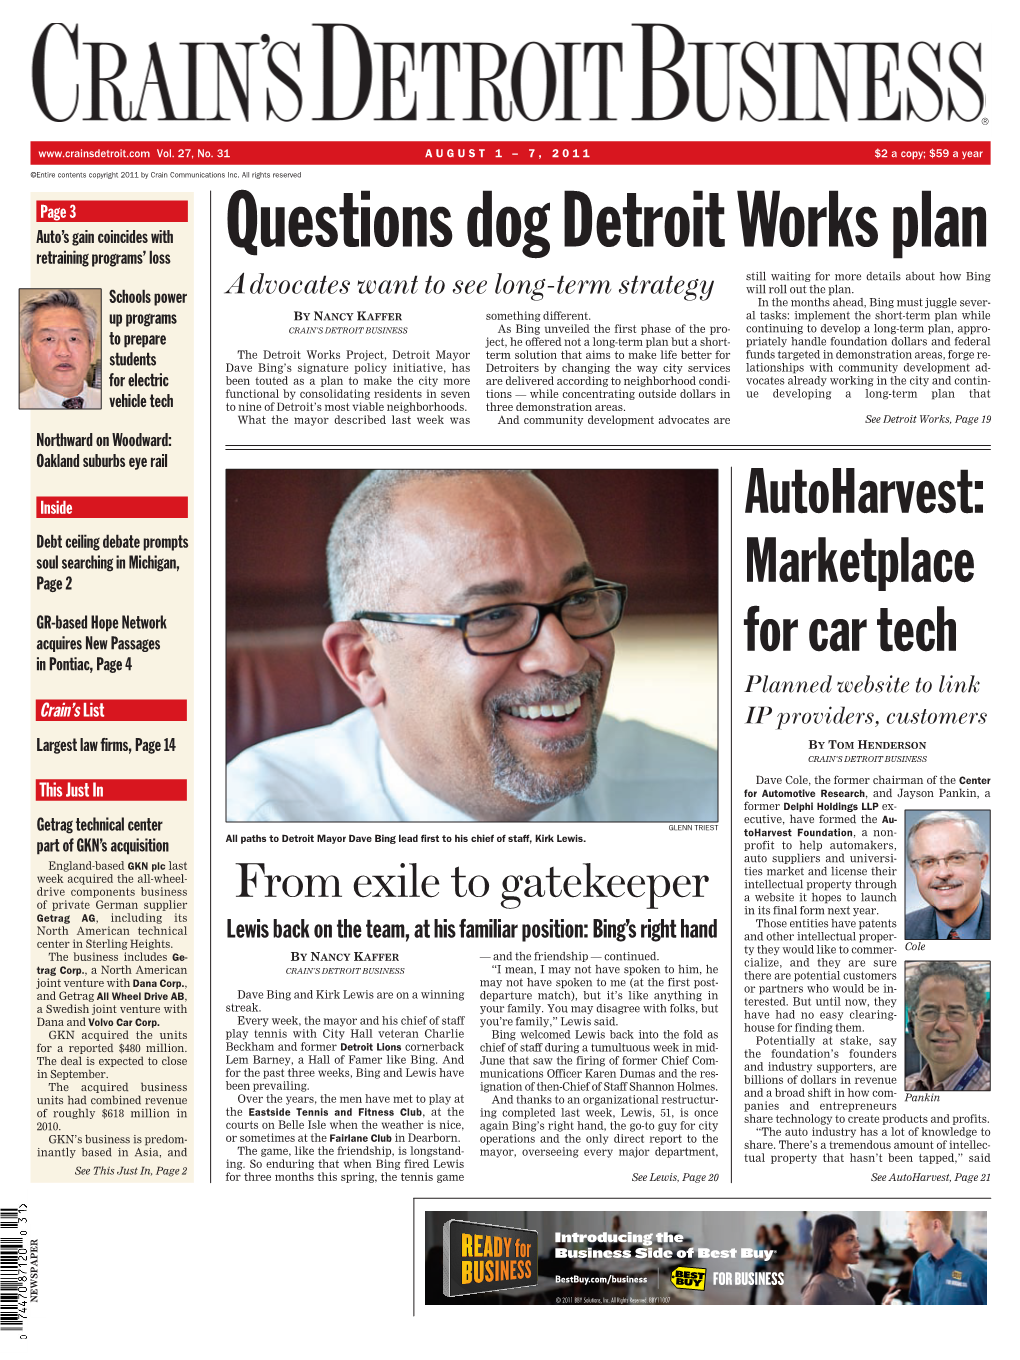 Questions Dog Detroit Works Plan